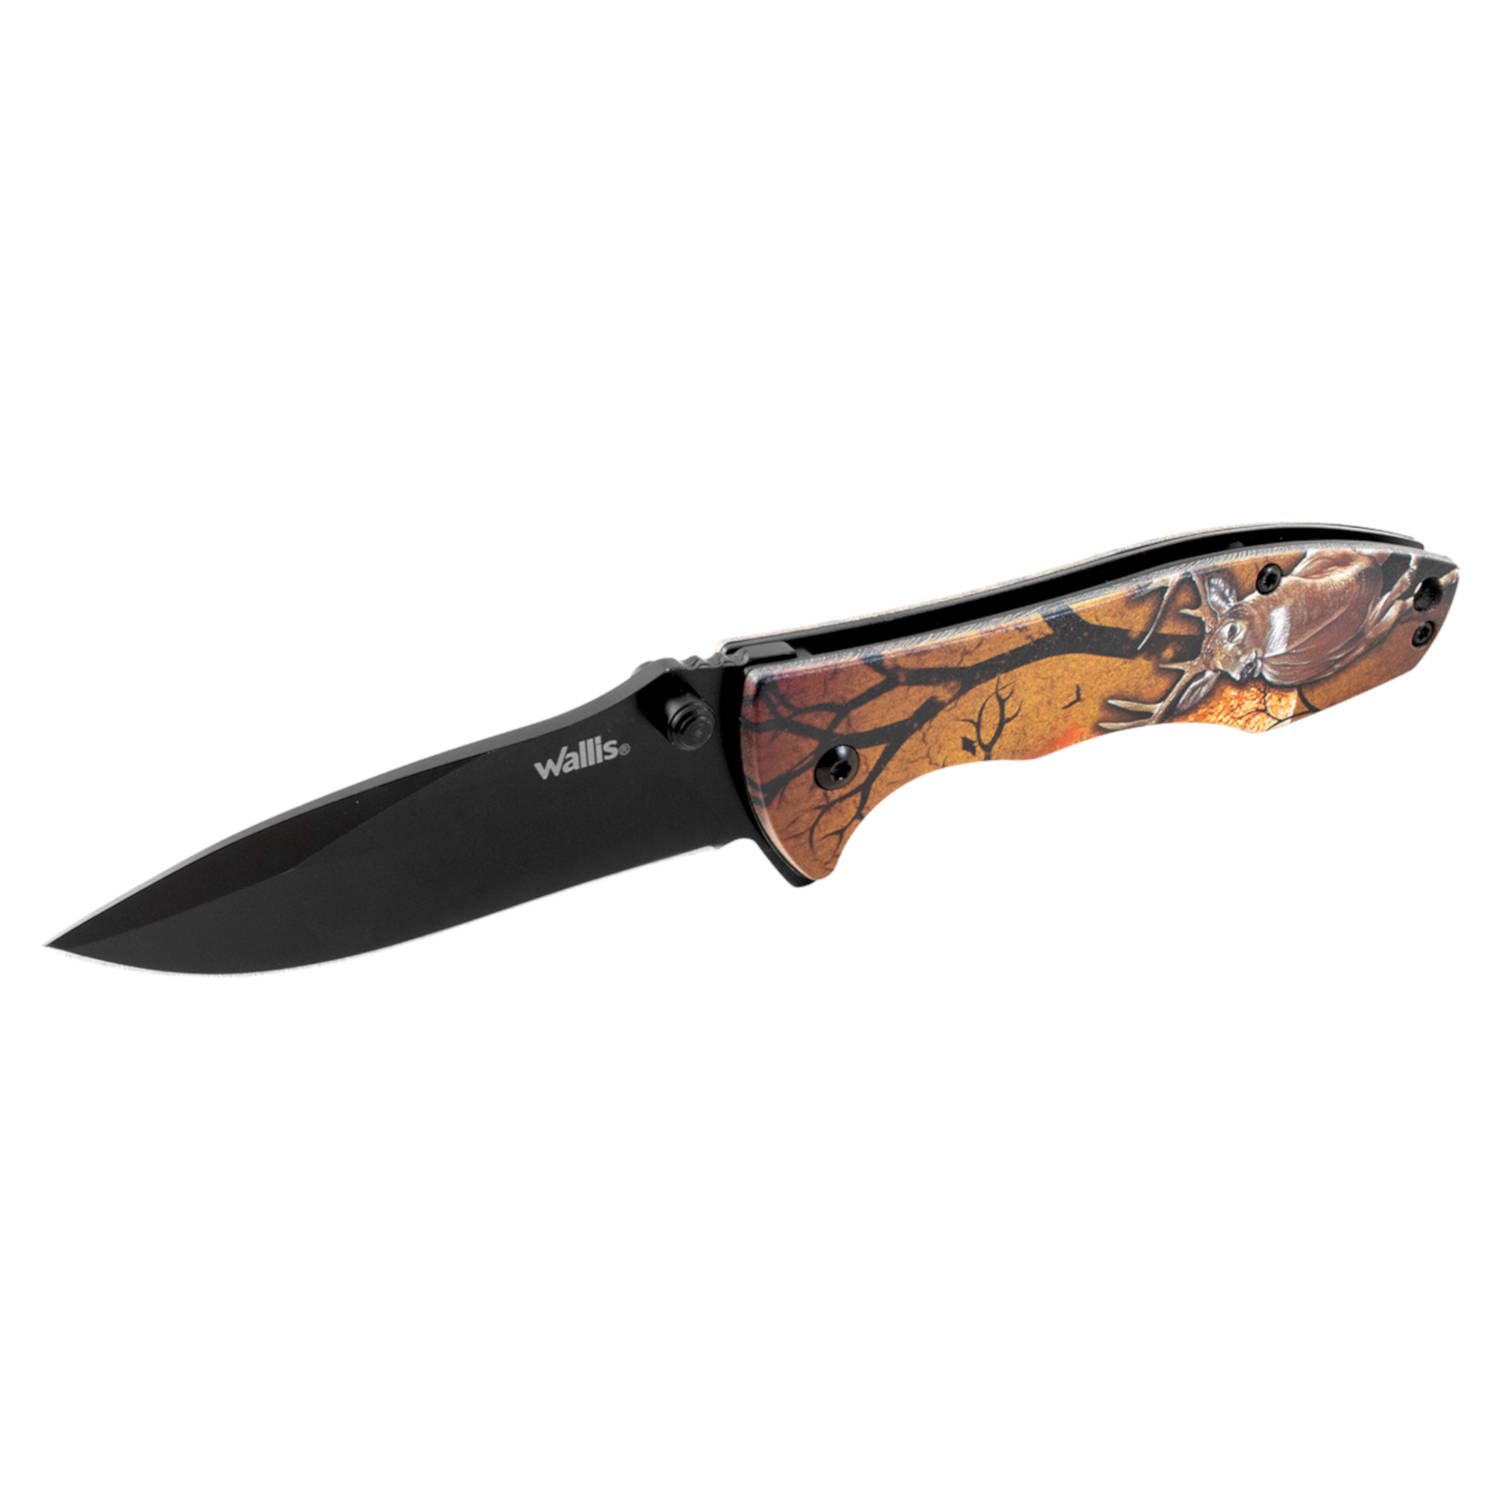 Afilador para cuchillos/navajas naranja-negro - Productos